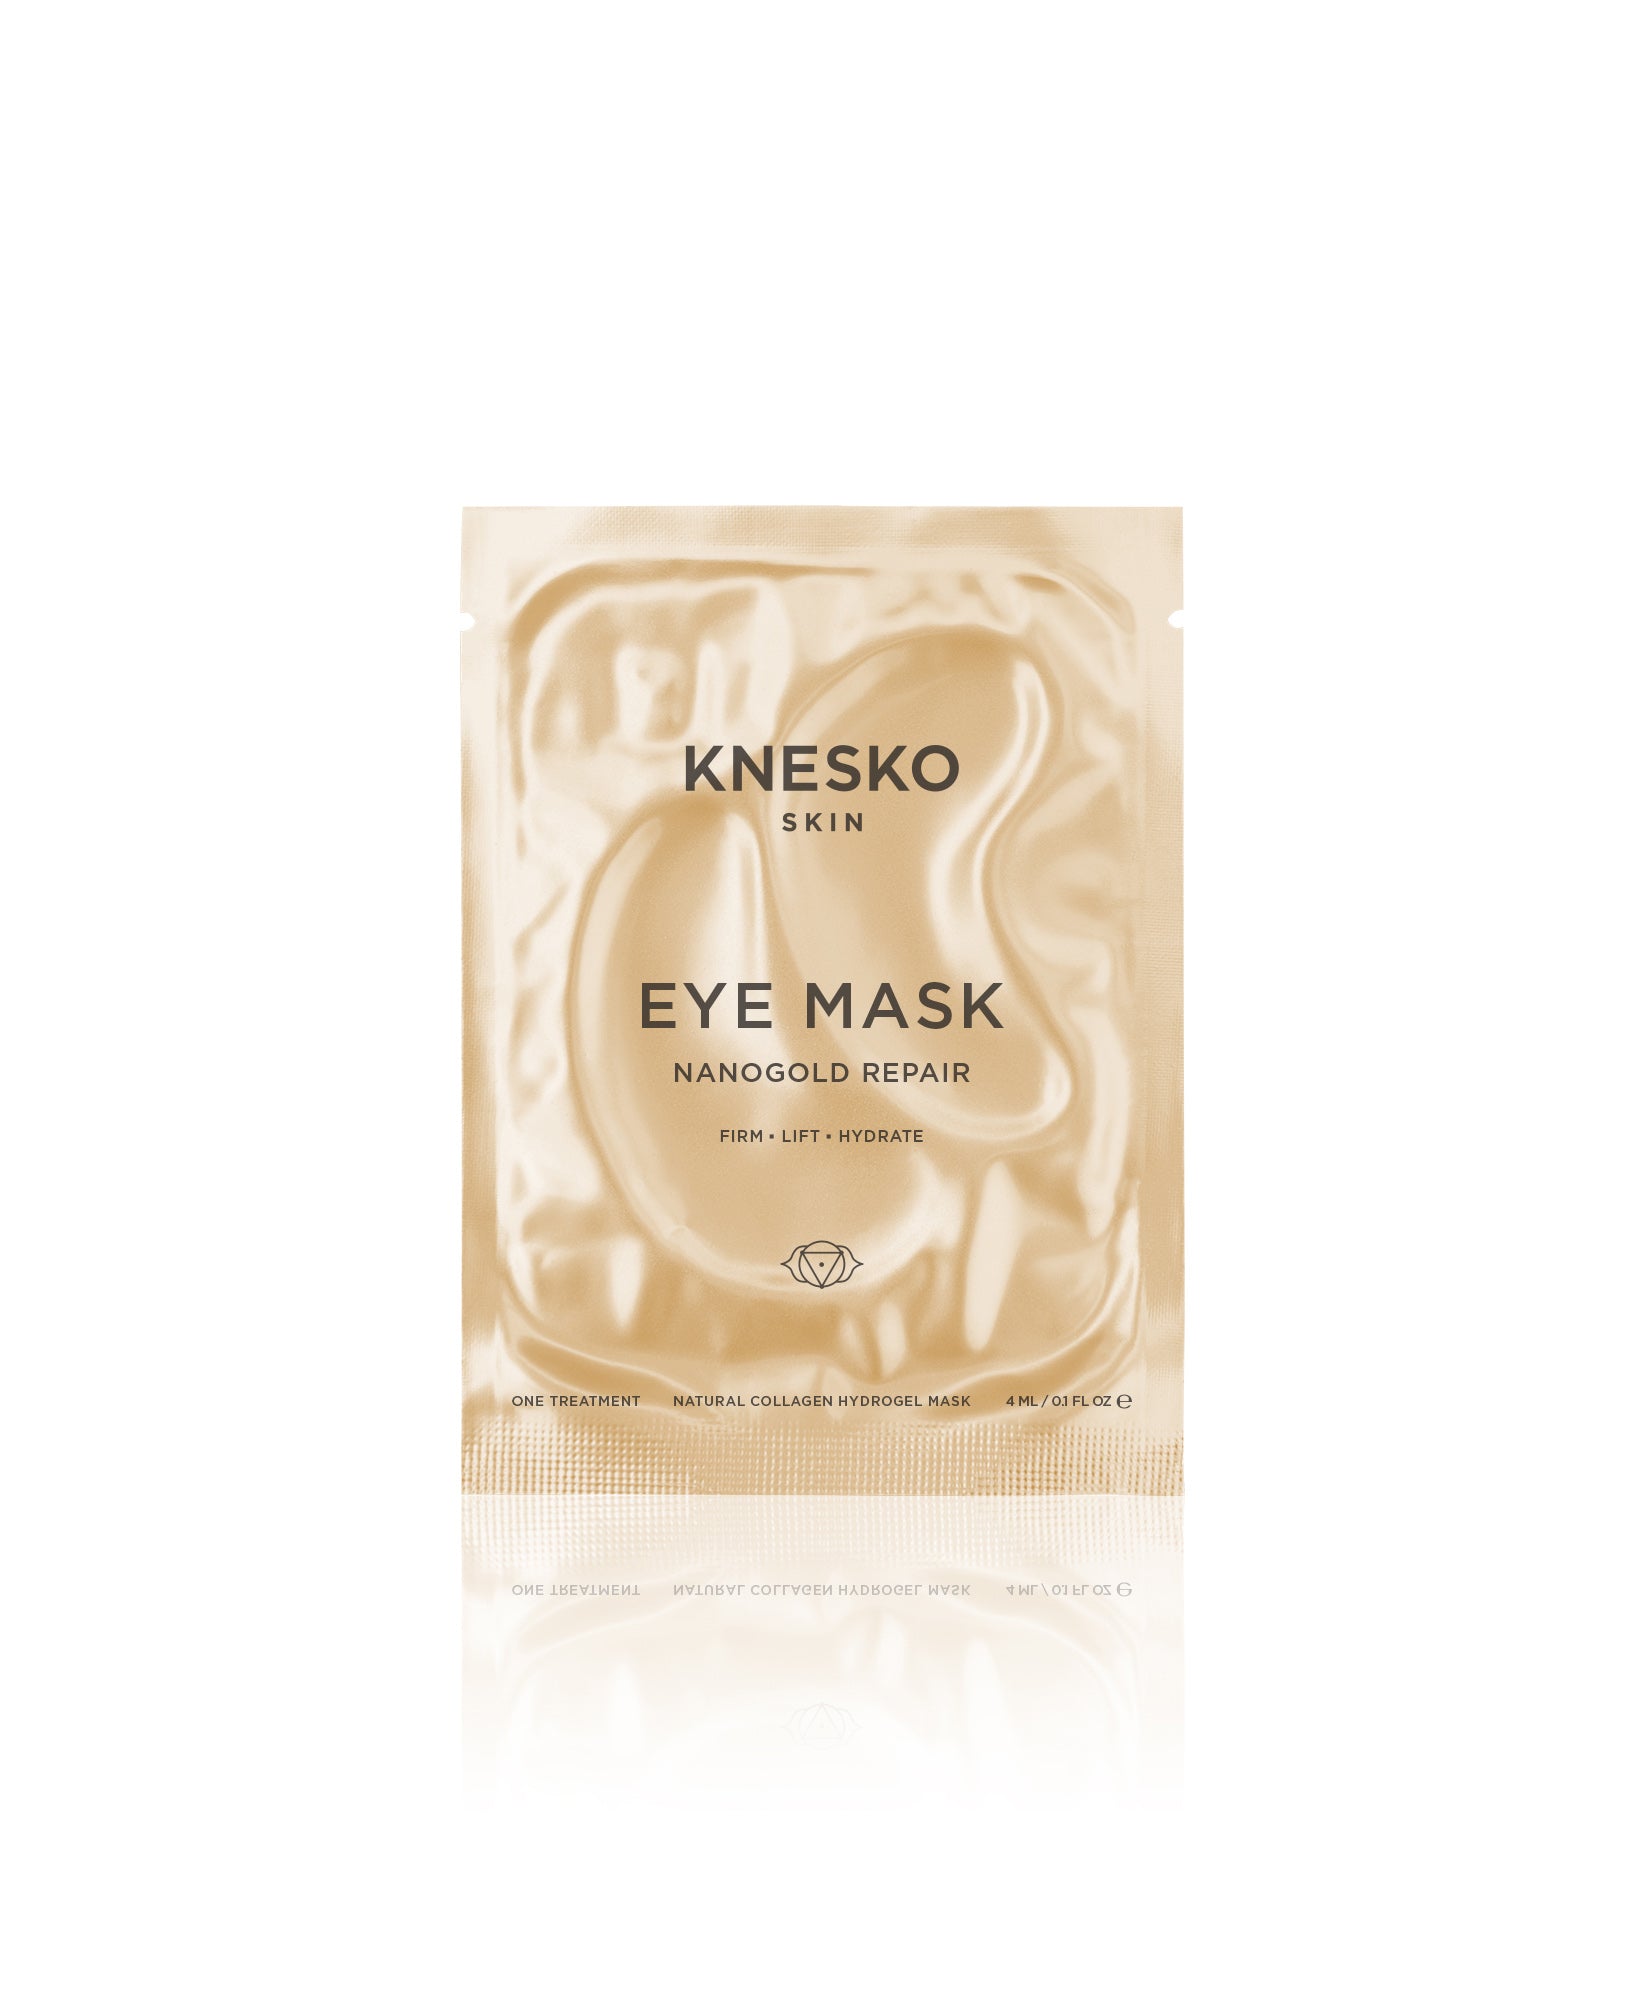 Nano Gold Repair Collagen Eye Mask packaging.